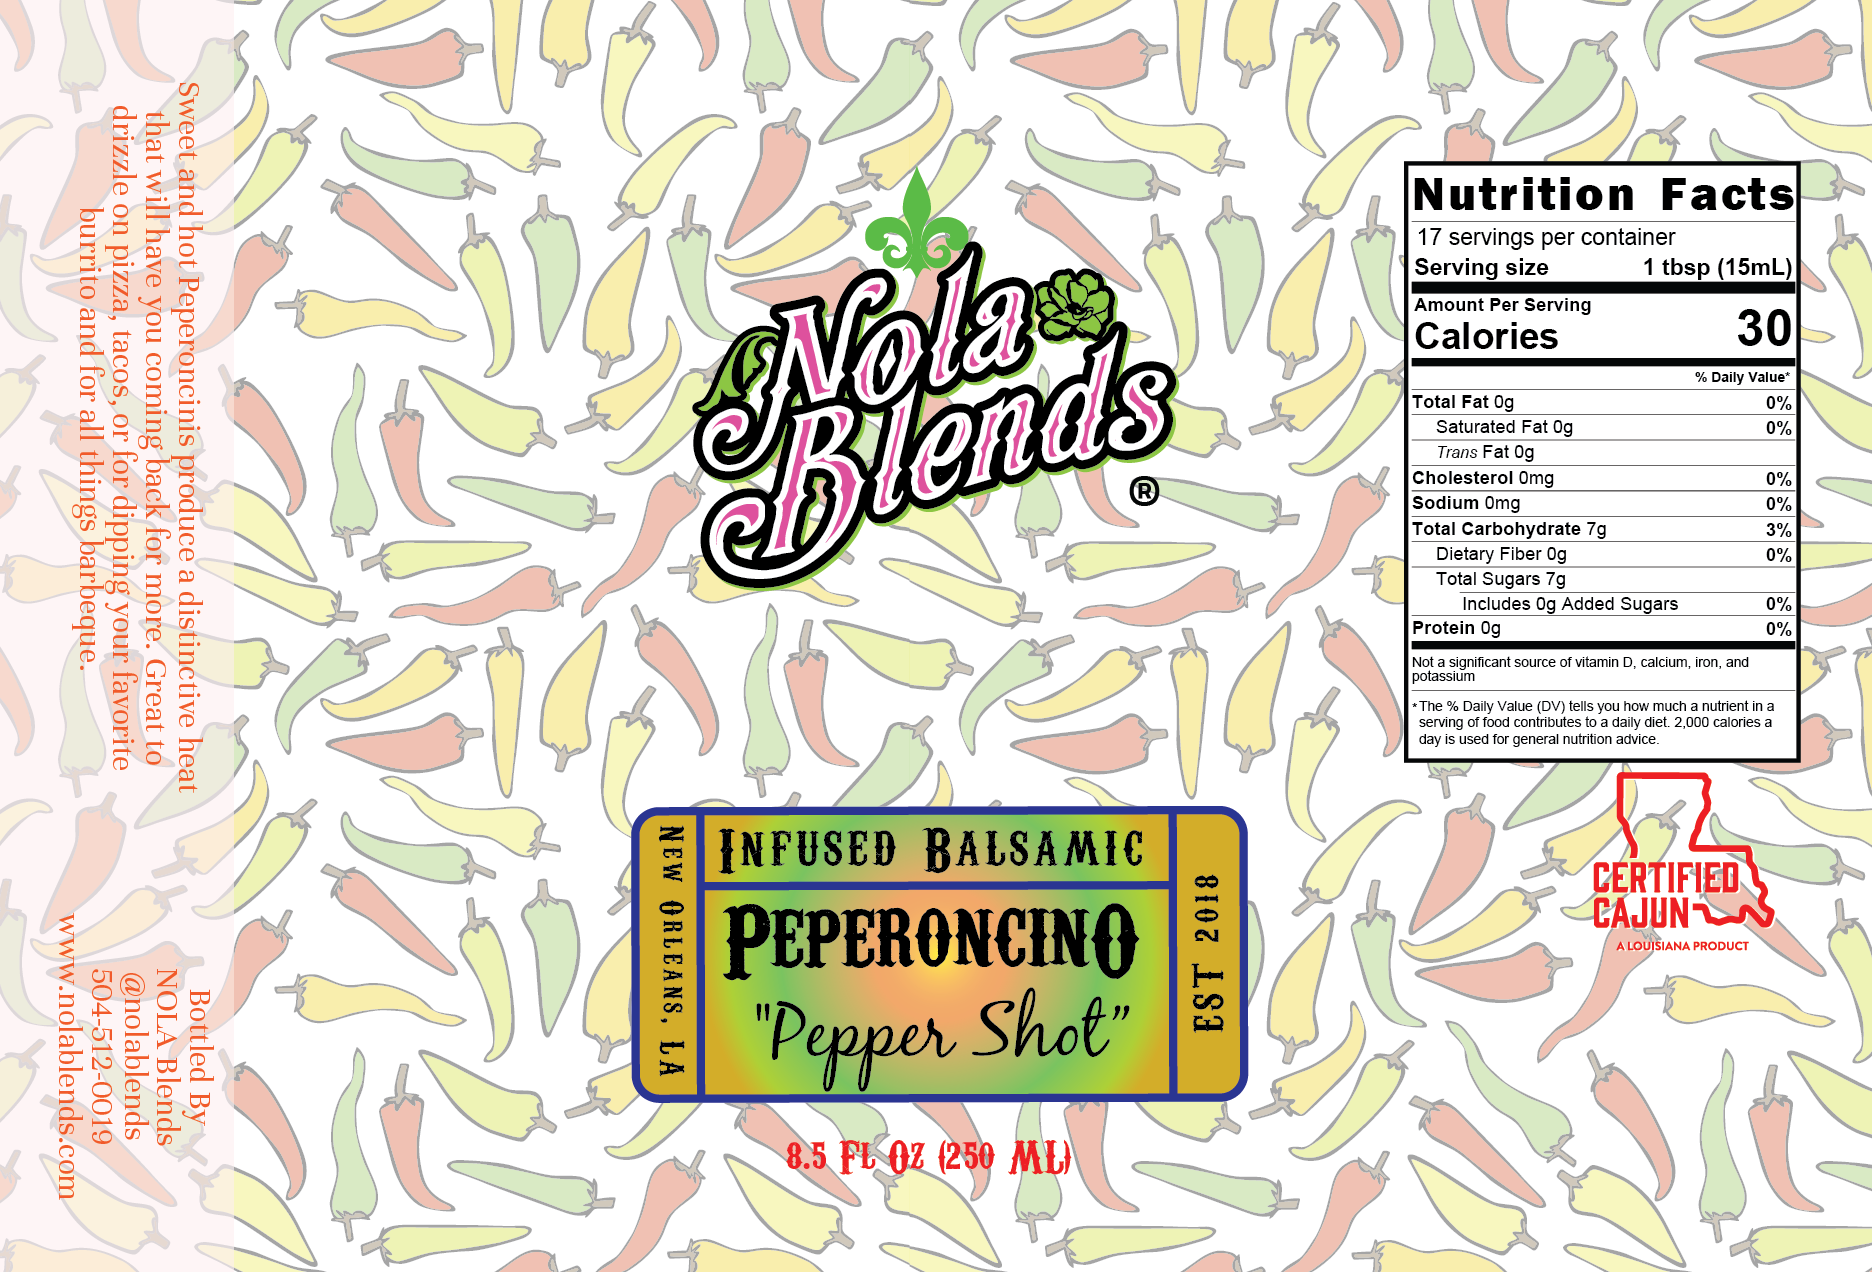 Peperoncino "Pepper Shot" - Infused White Balsamic Vinegar